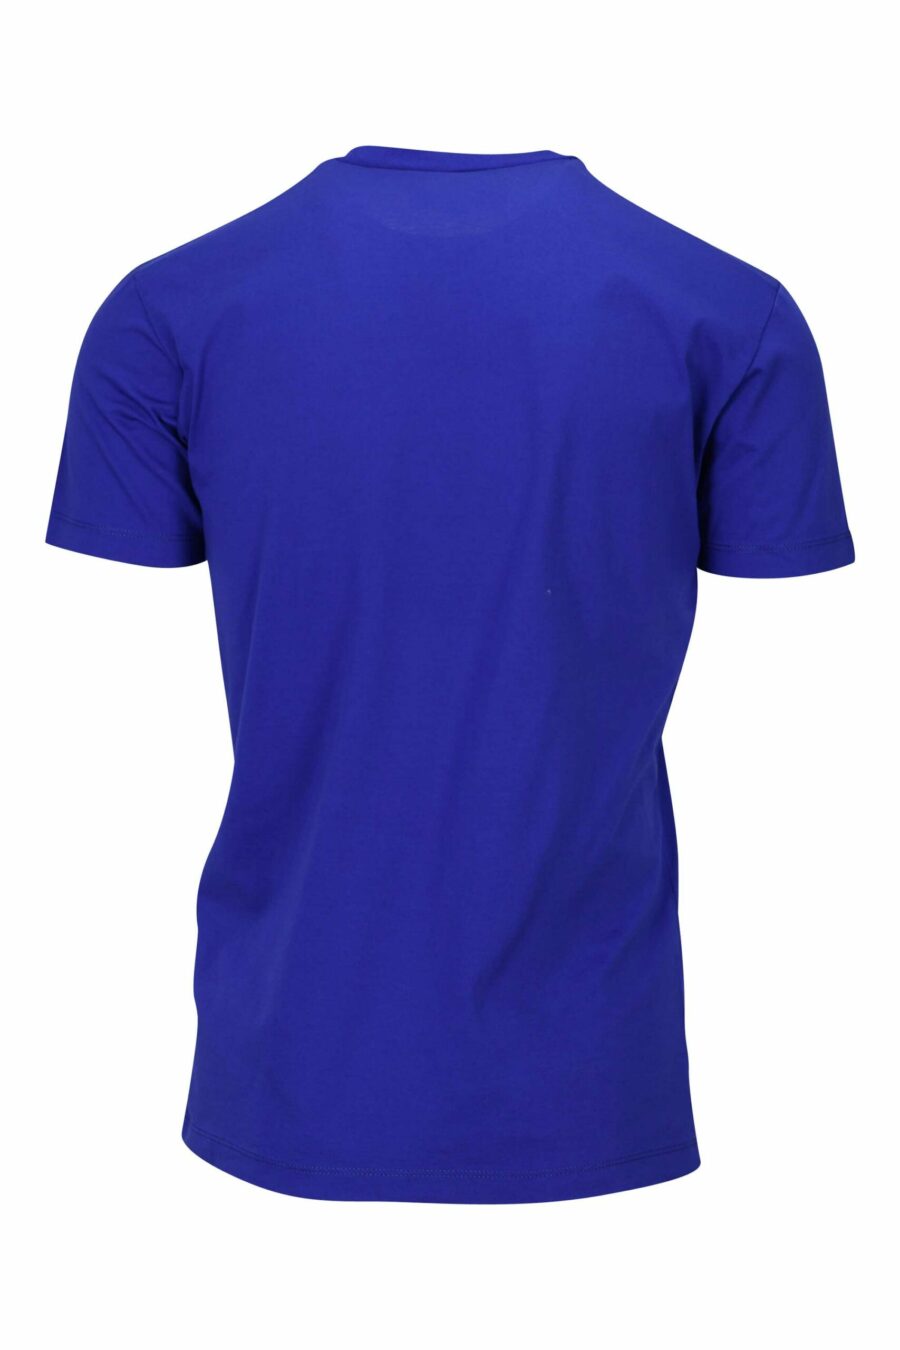 Camiseta azul oscuro con minilogo "icon" - 8054148021160 1 scaled